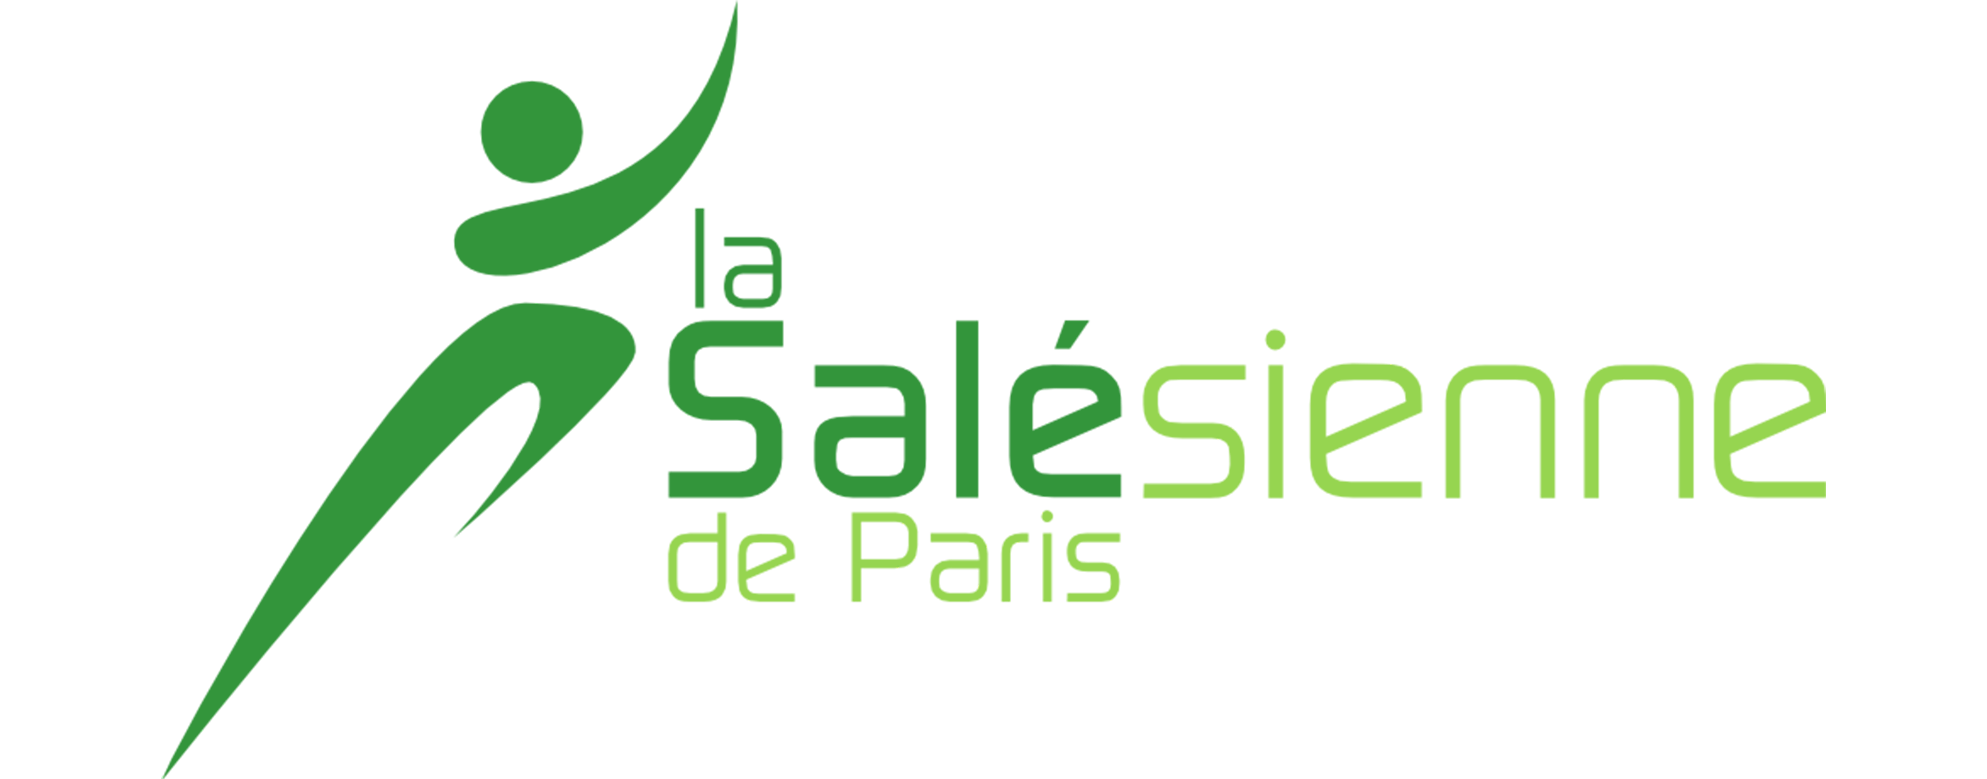 Salésienne de Paris - Omnisports